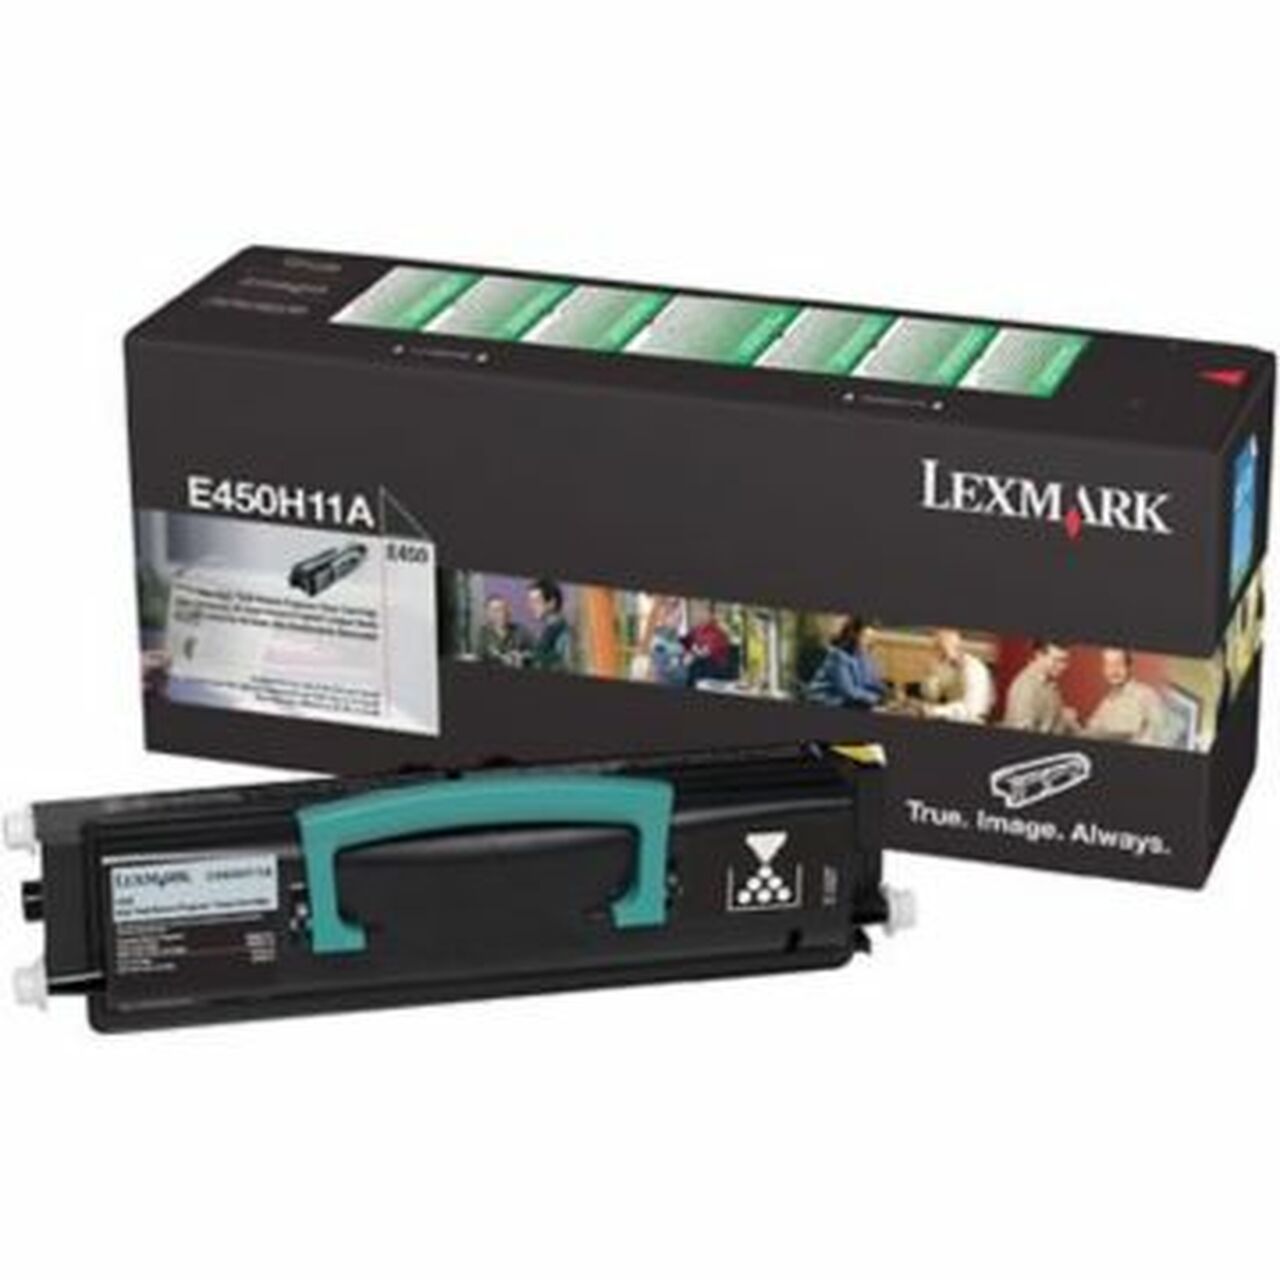 Absolute Toner Lexmark E450H11A Original Genuine OEM High Yield Black Toner Cartridge Original Lexmark Cartridges